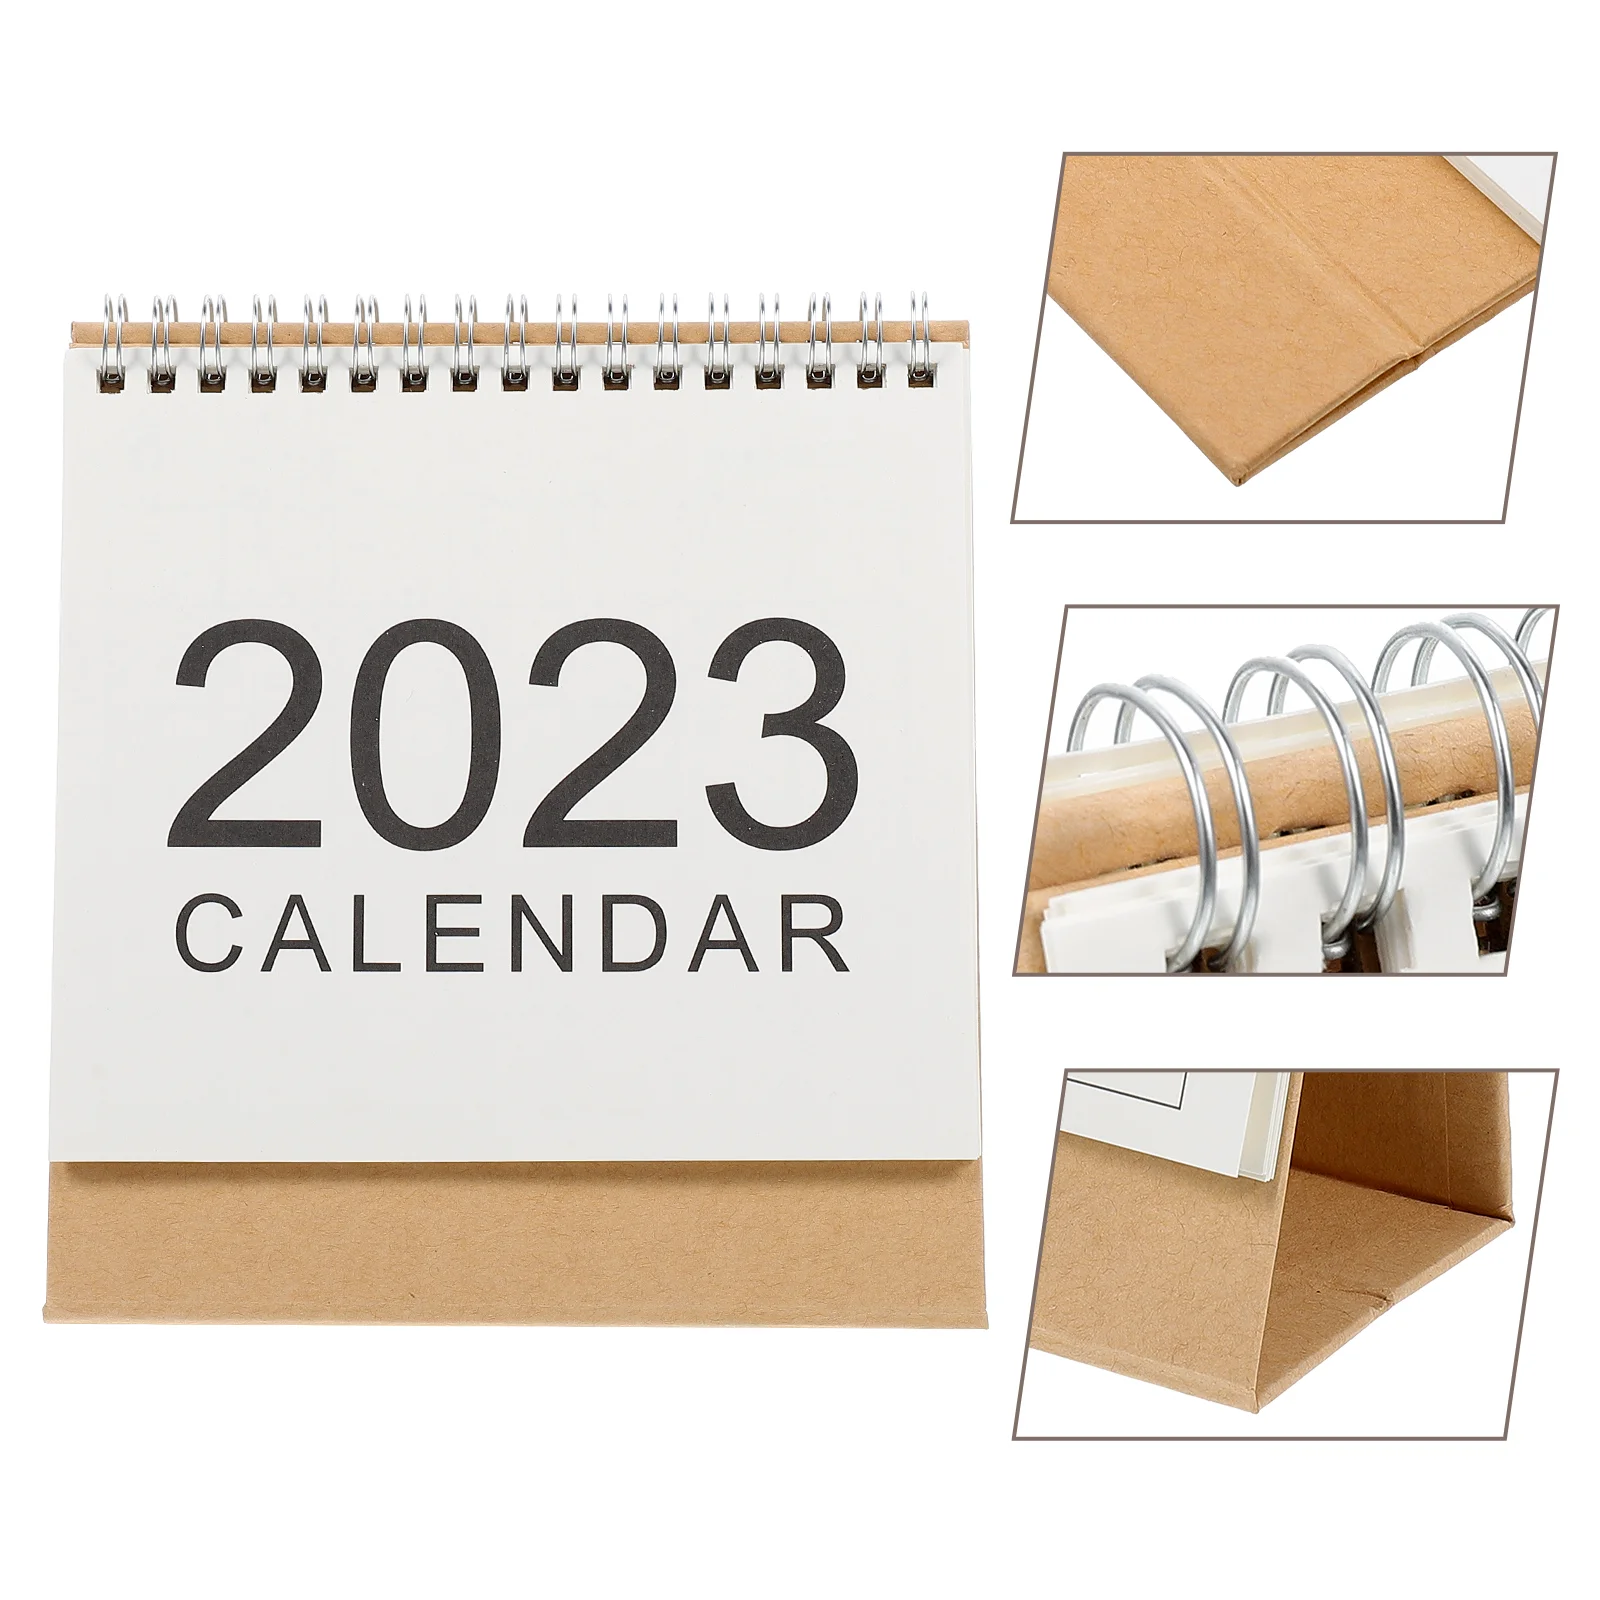 

Calendar Countdown Reminder Desk Decor Paper Small Fresh Office Table Schedule Writing Planner Decorative Work Decoration